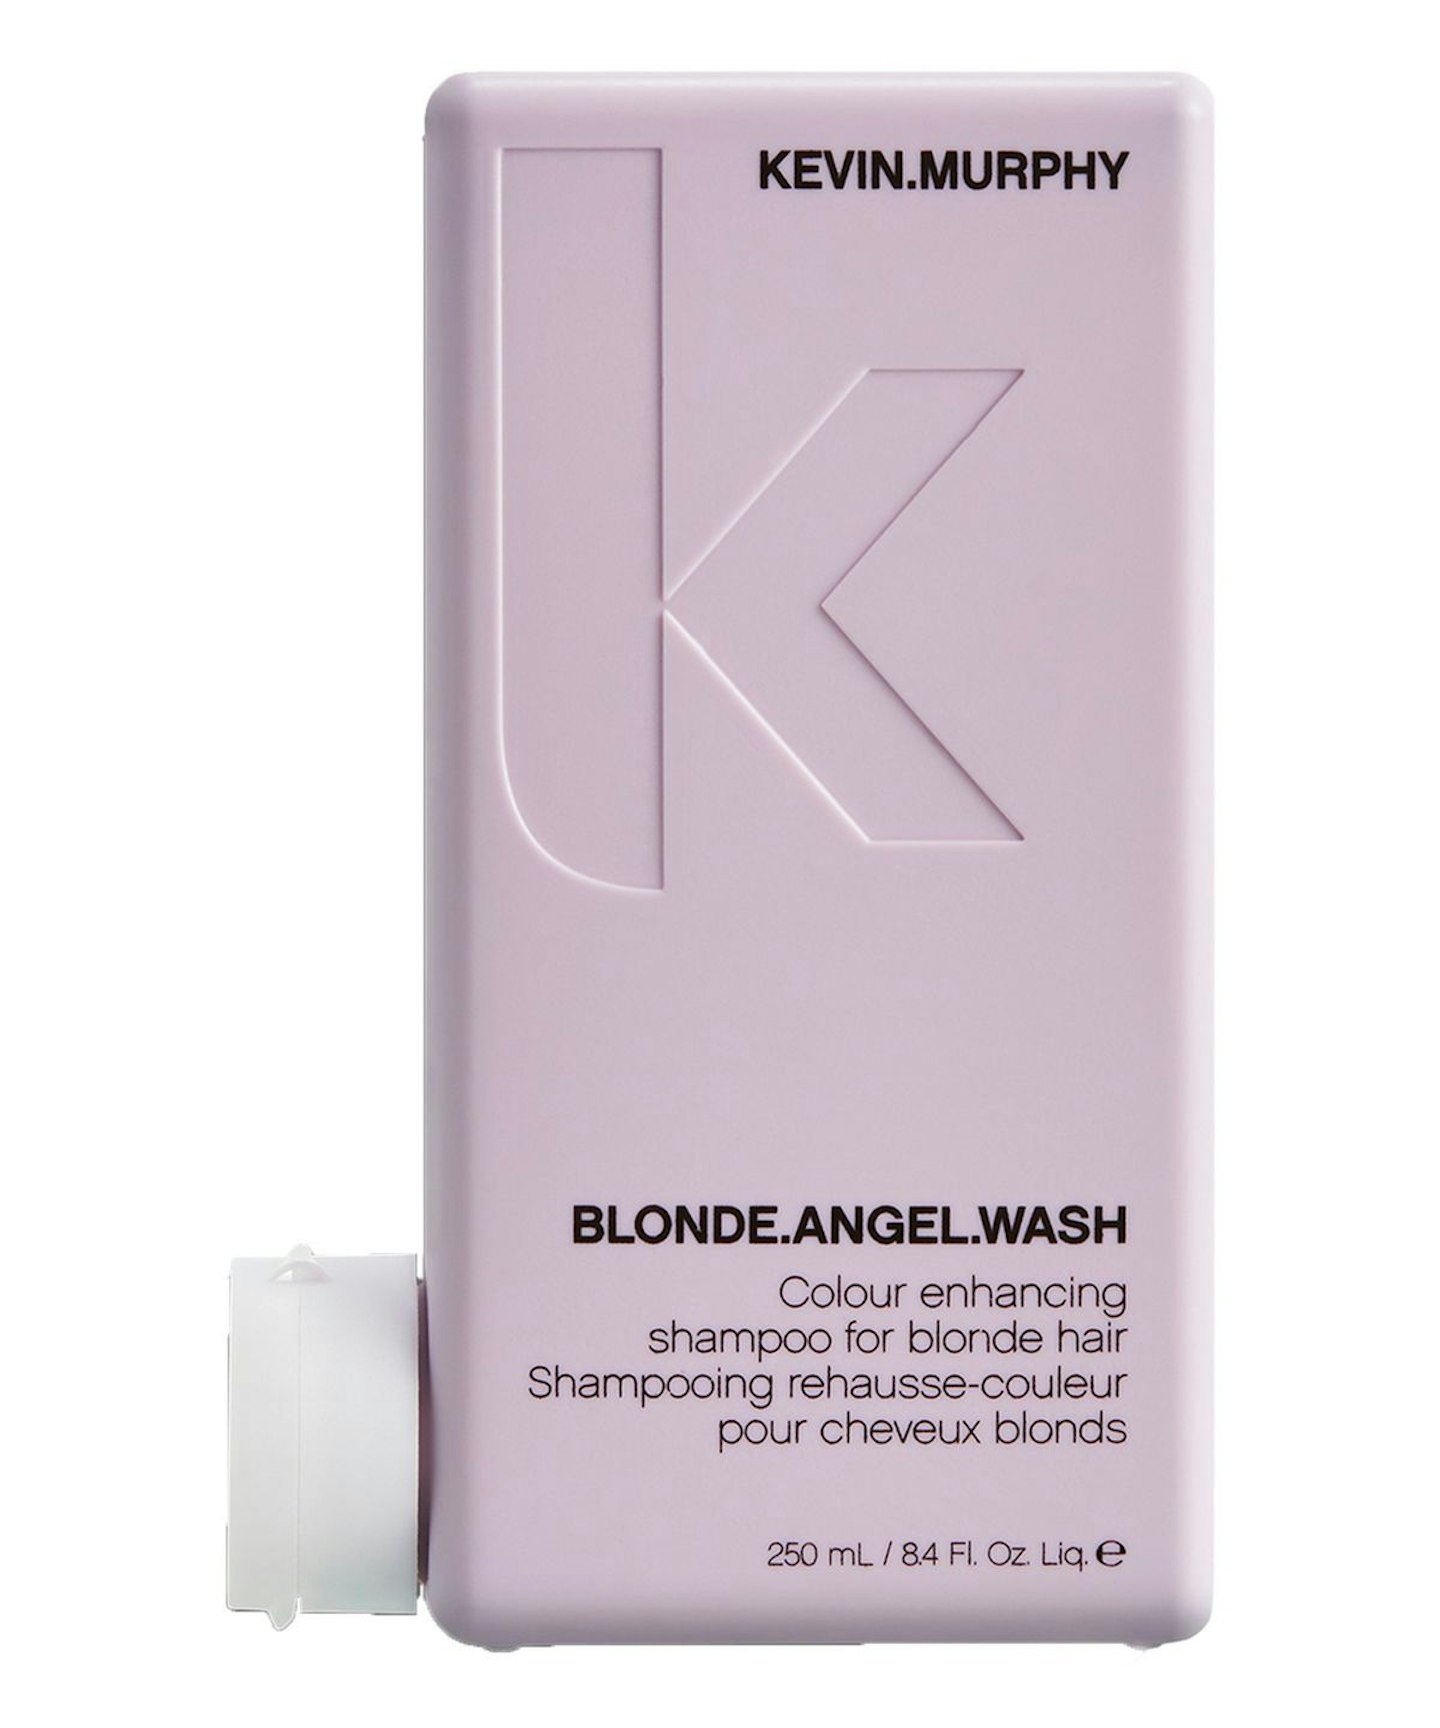 Kevin Murphy Blonde.Angel.Wash, £22